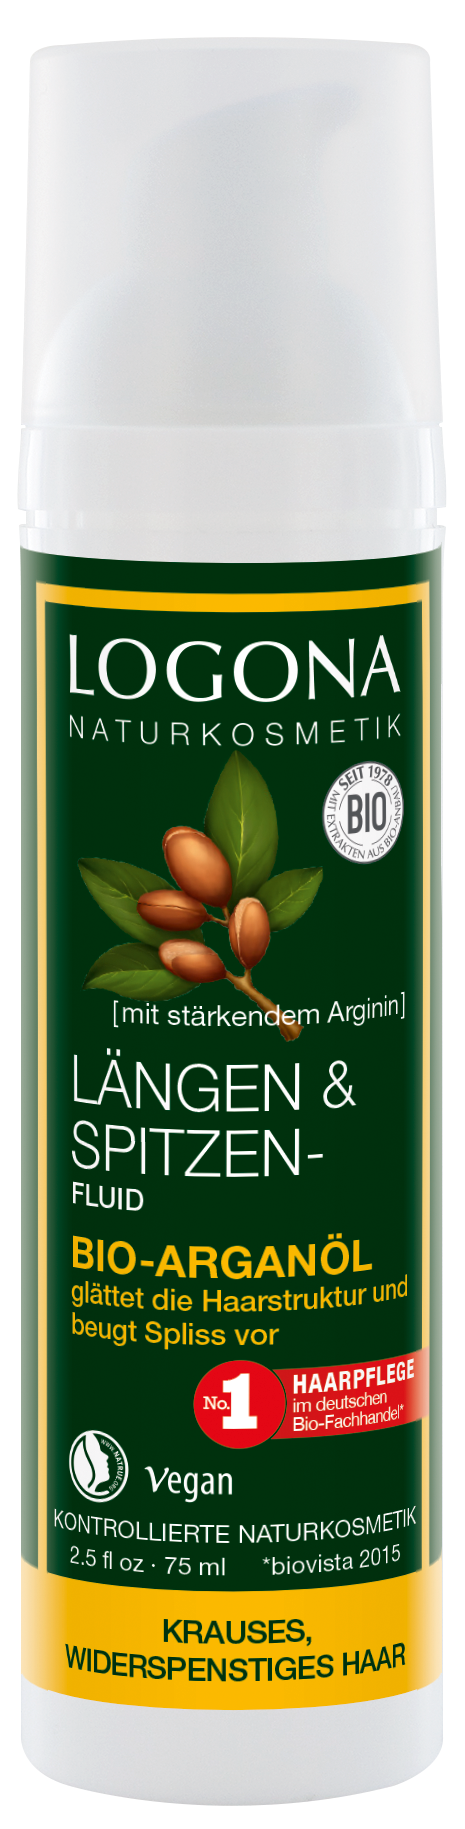 Längen- und Spitzenfluid Bio-Arganöl Naturkosmetik | LOGONA